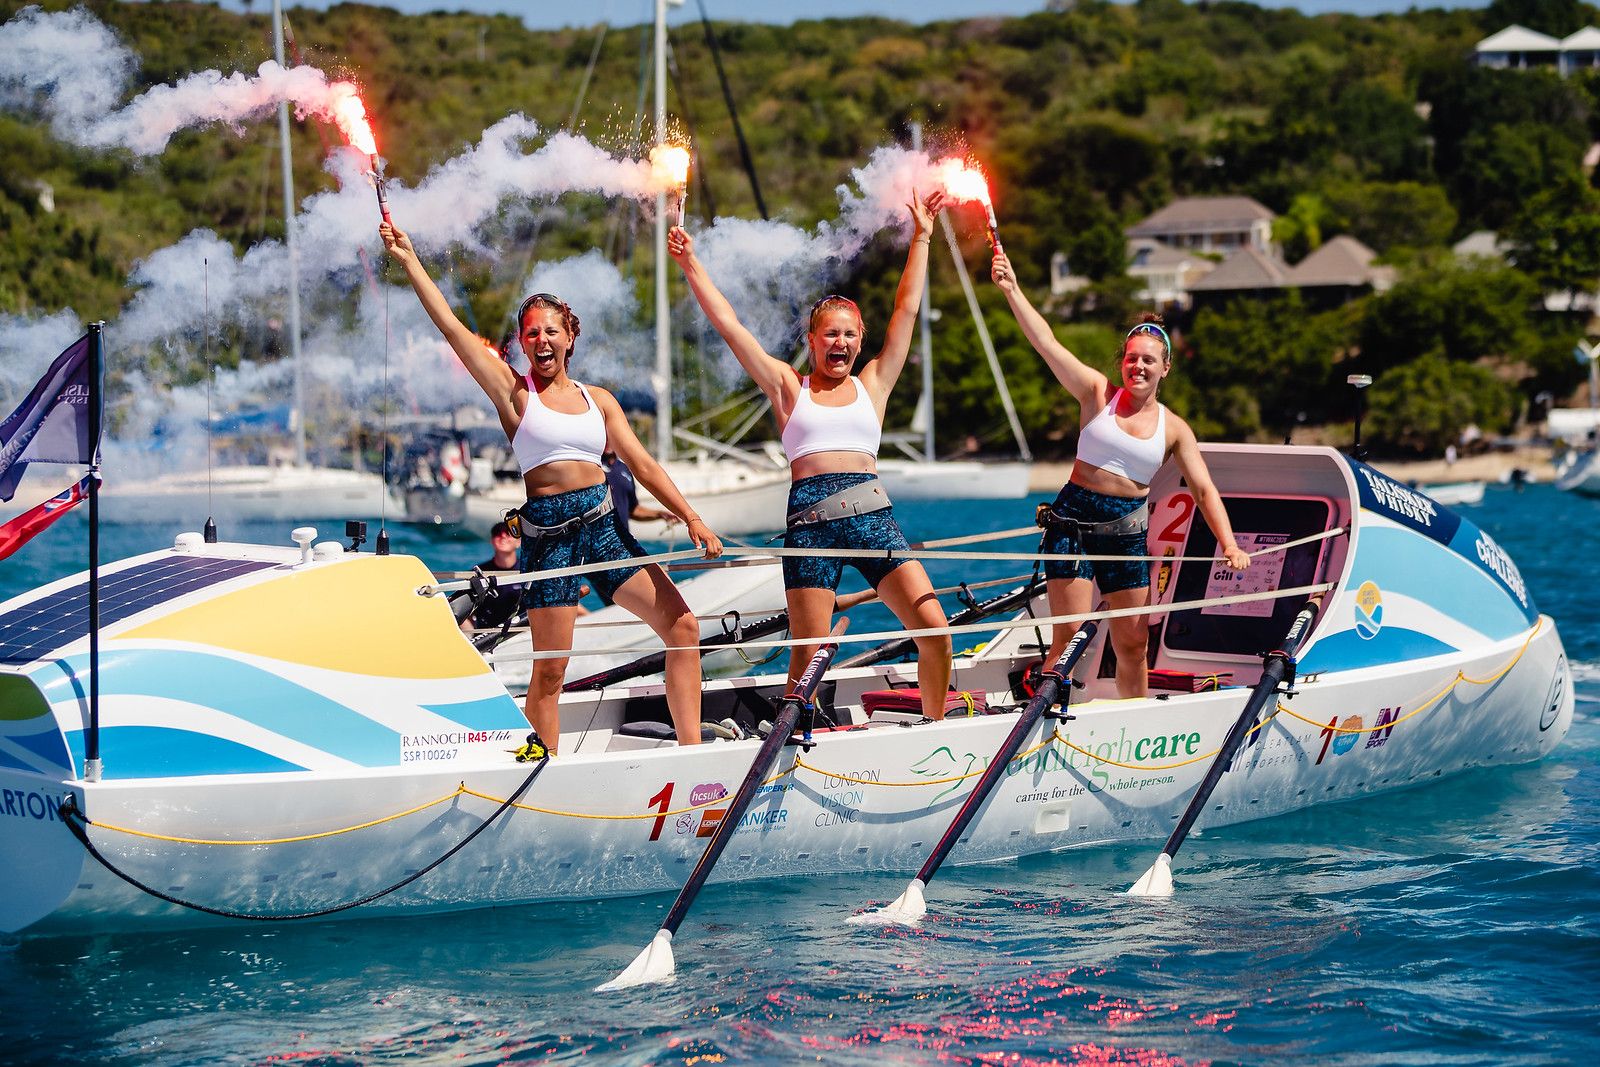 Bristol graduates become youngest women to row across Atlantic